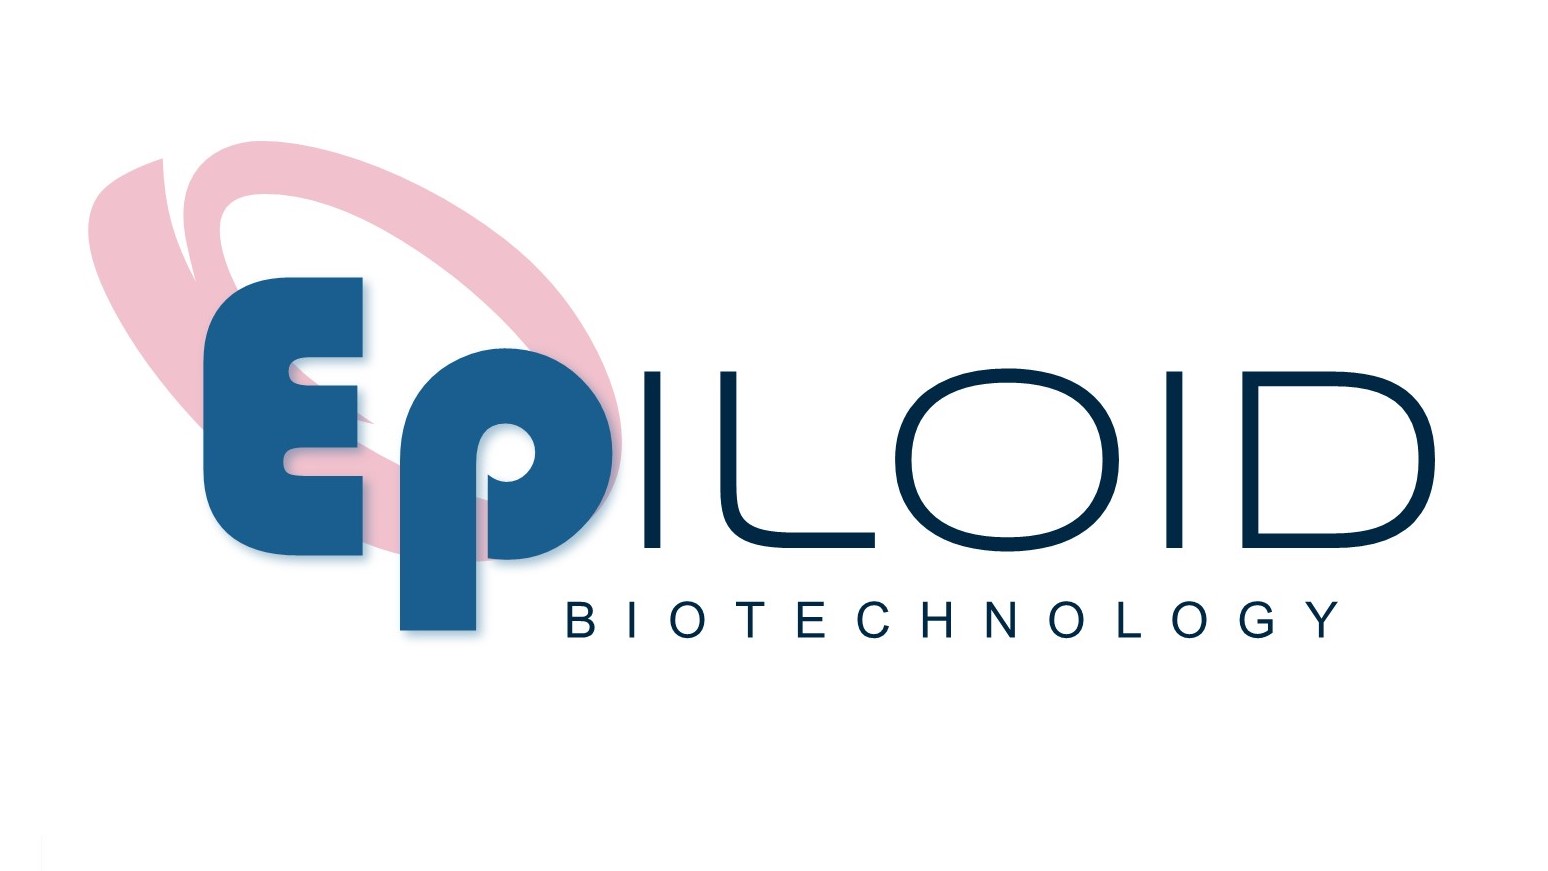 Epiloid Biotech